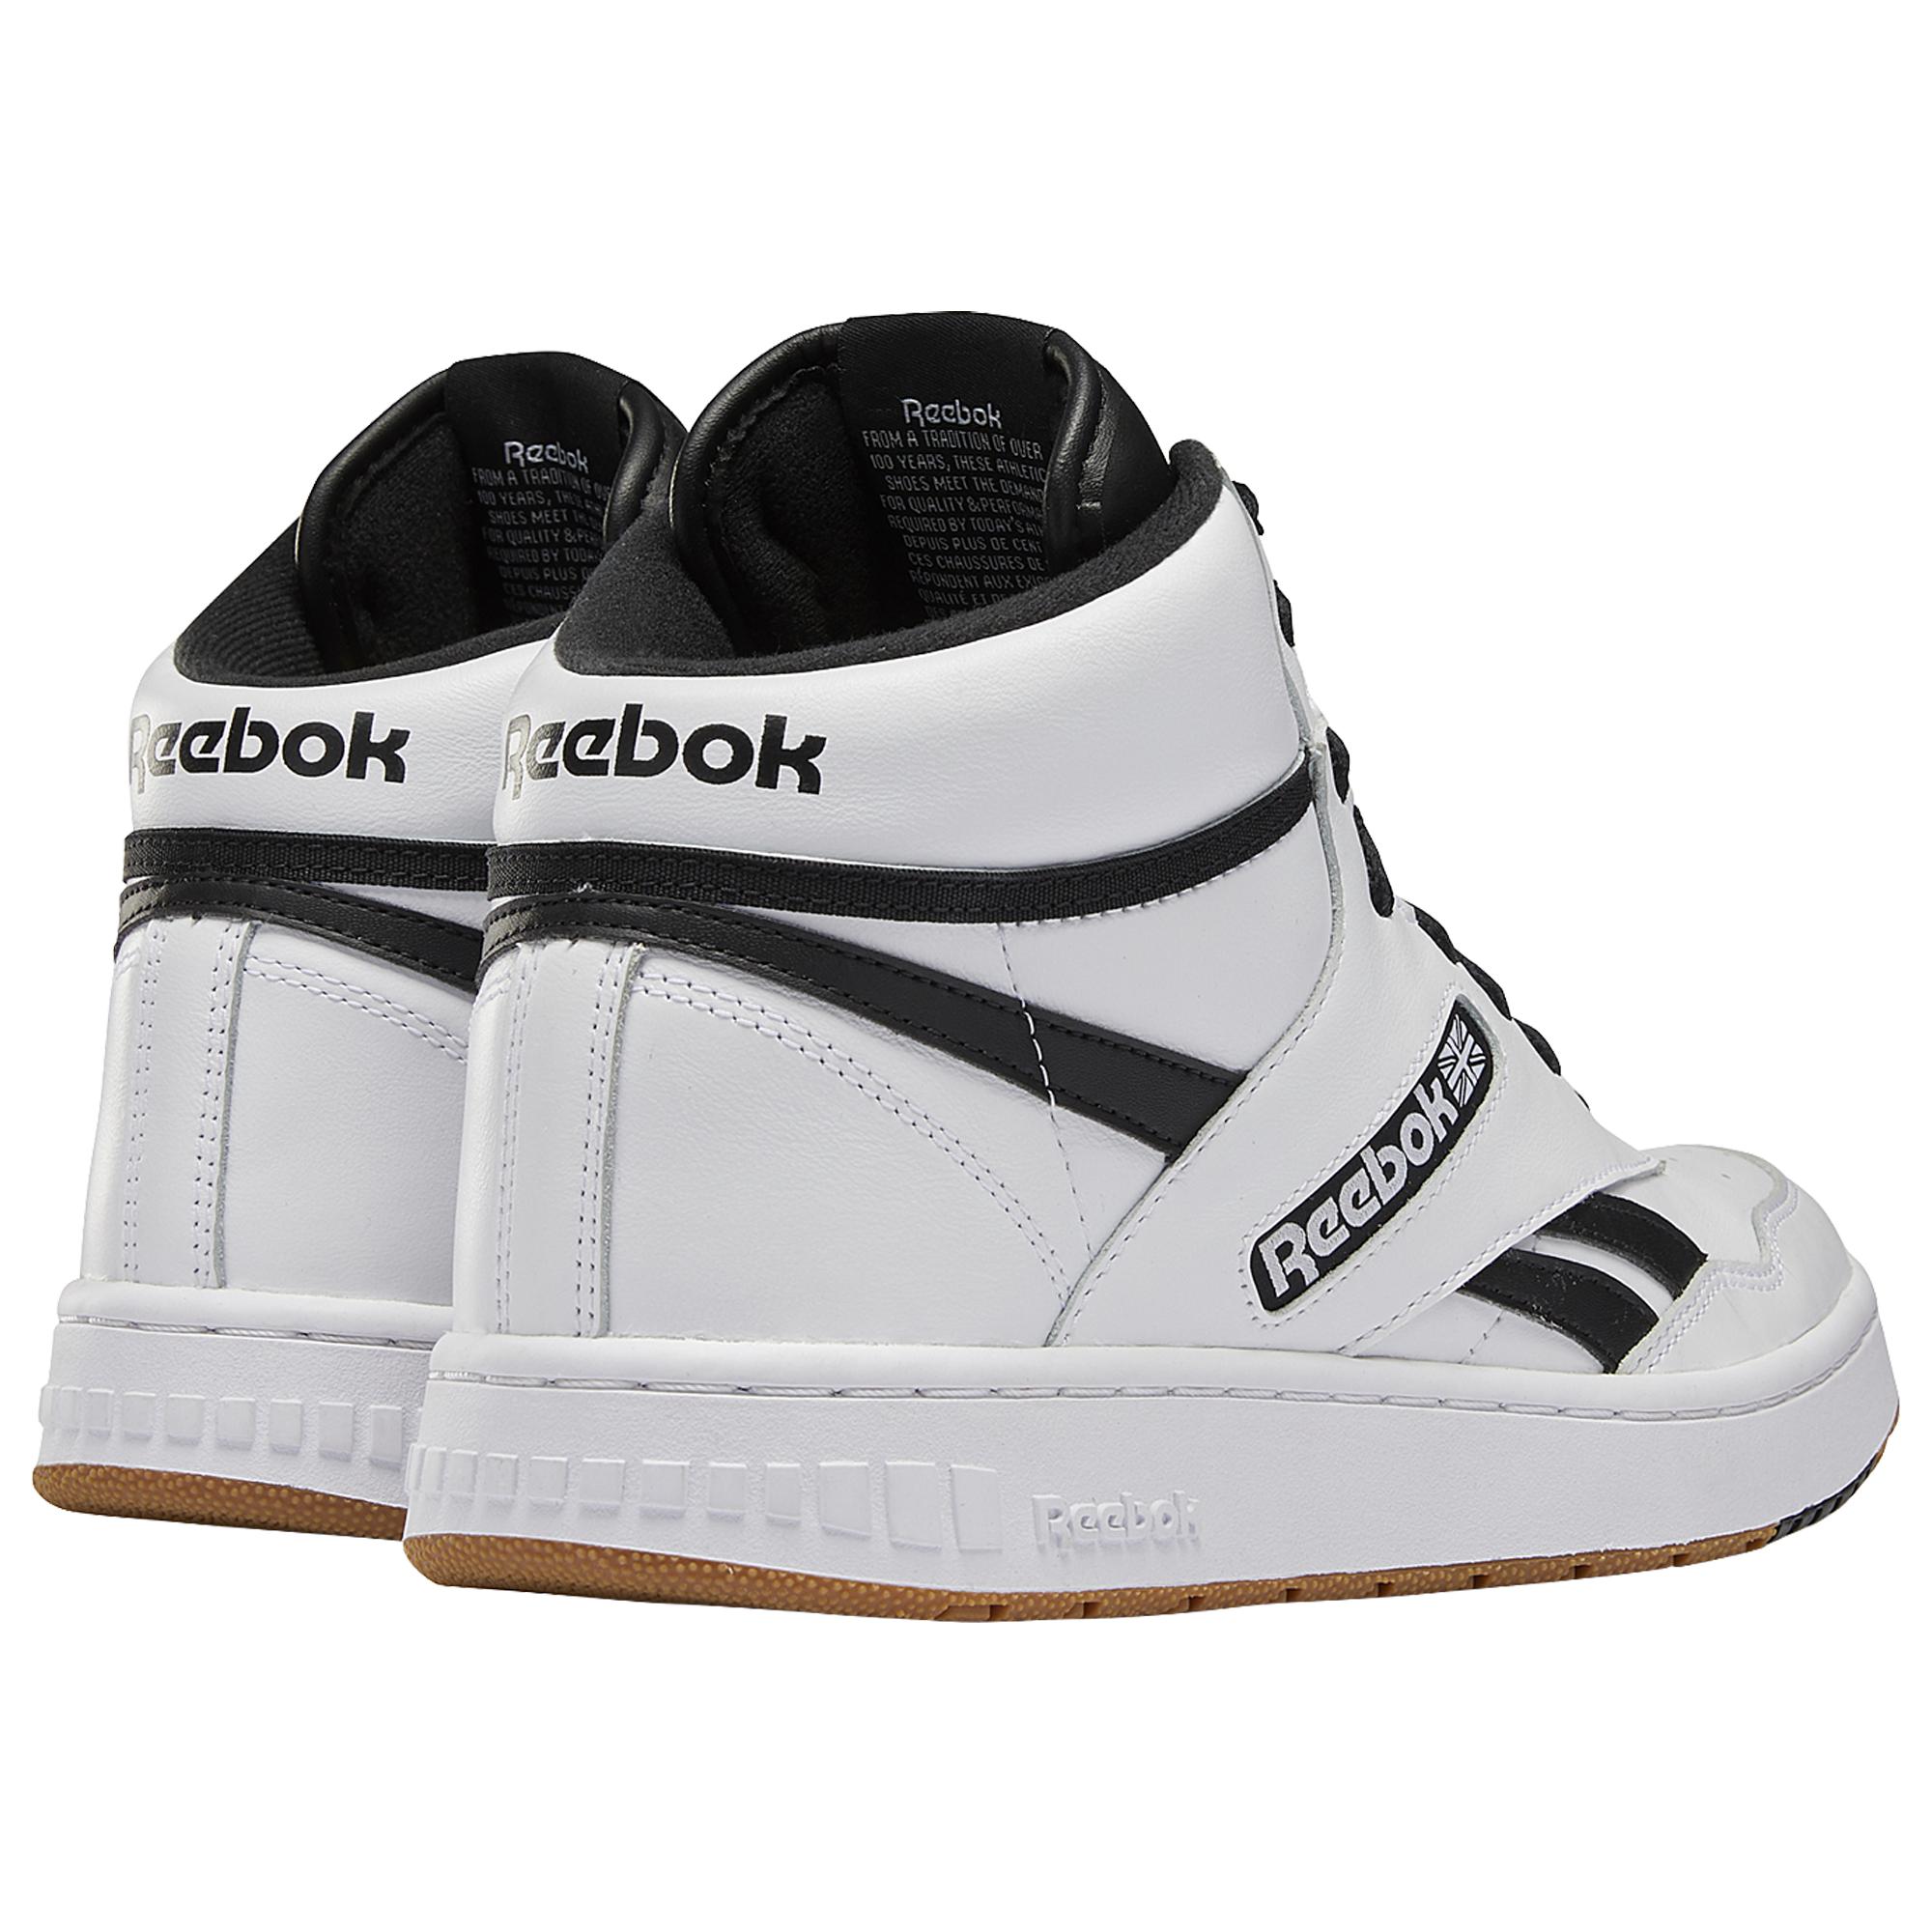 reebok men's bb4600 mid basketball shoe